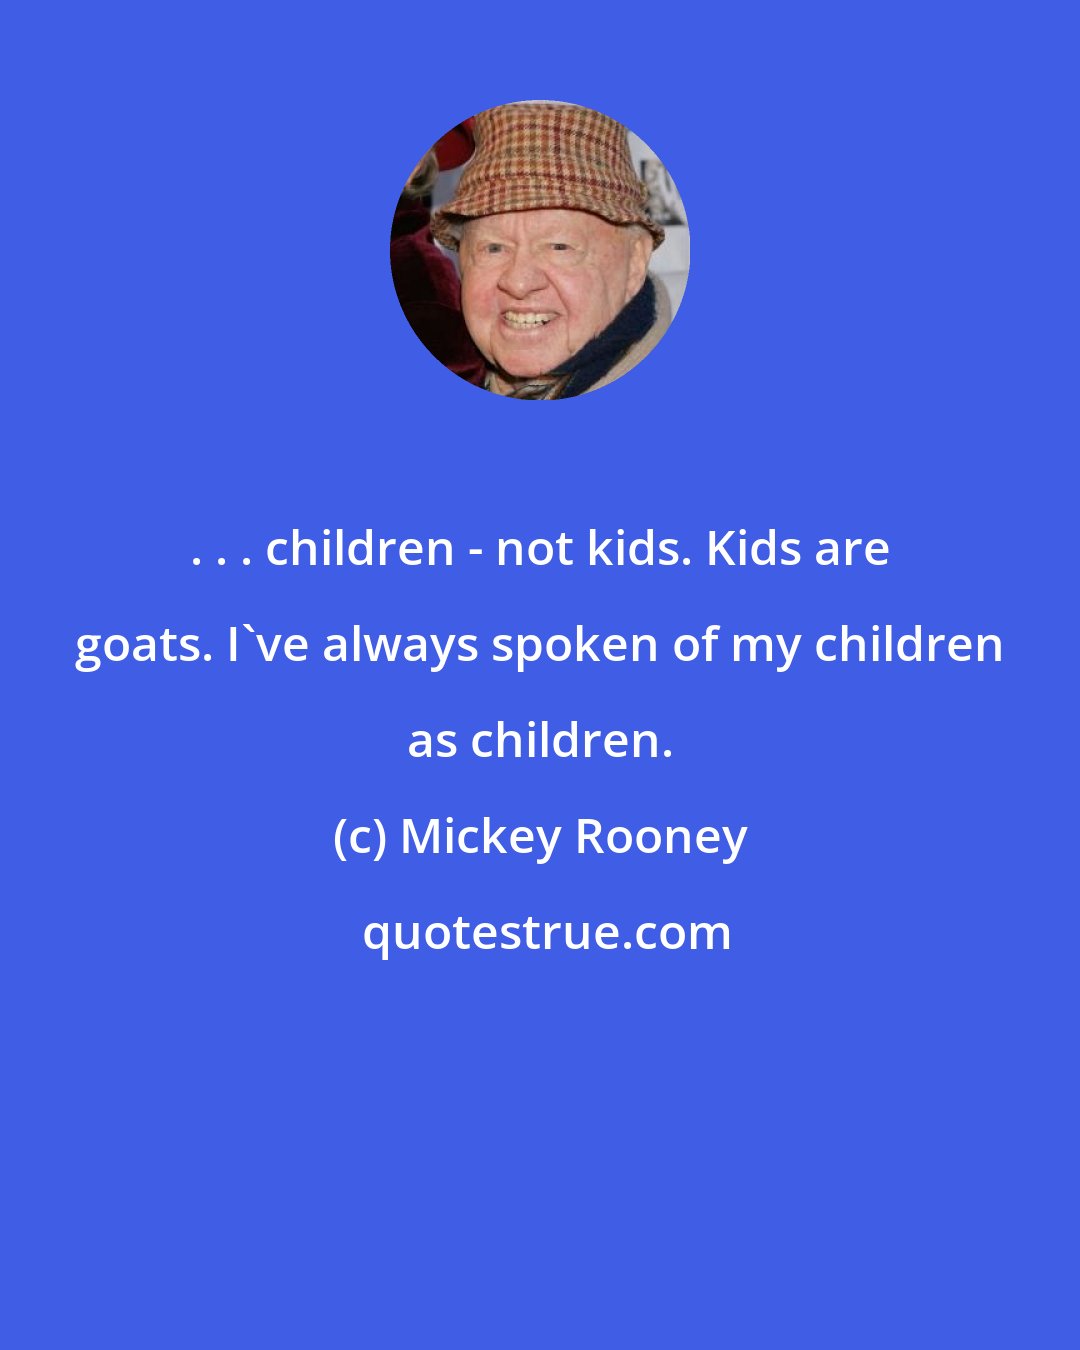 Mickey Rooney: . . . children - not kids. Kids are goats. I've always spoken of my children as children.